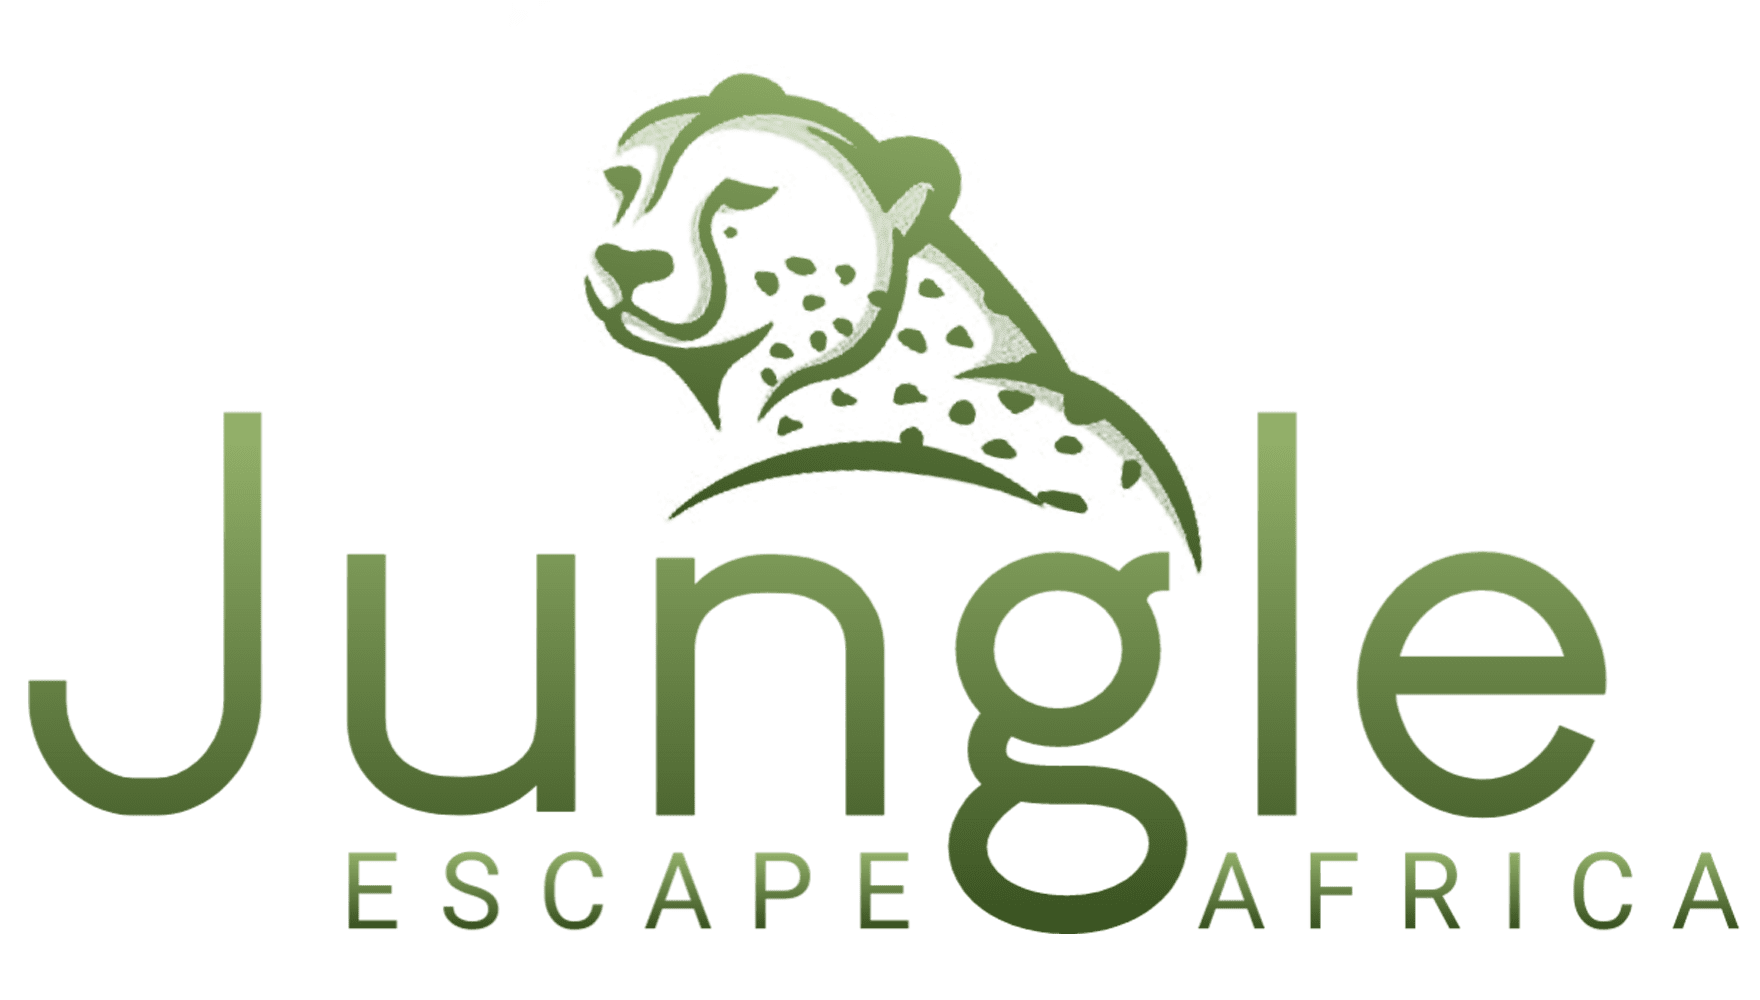 Jungle Escape Africa